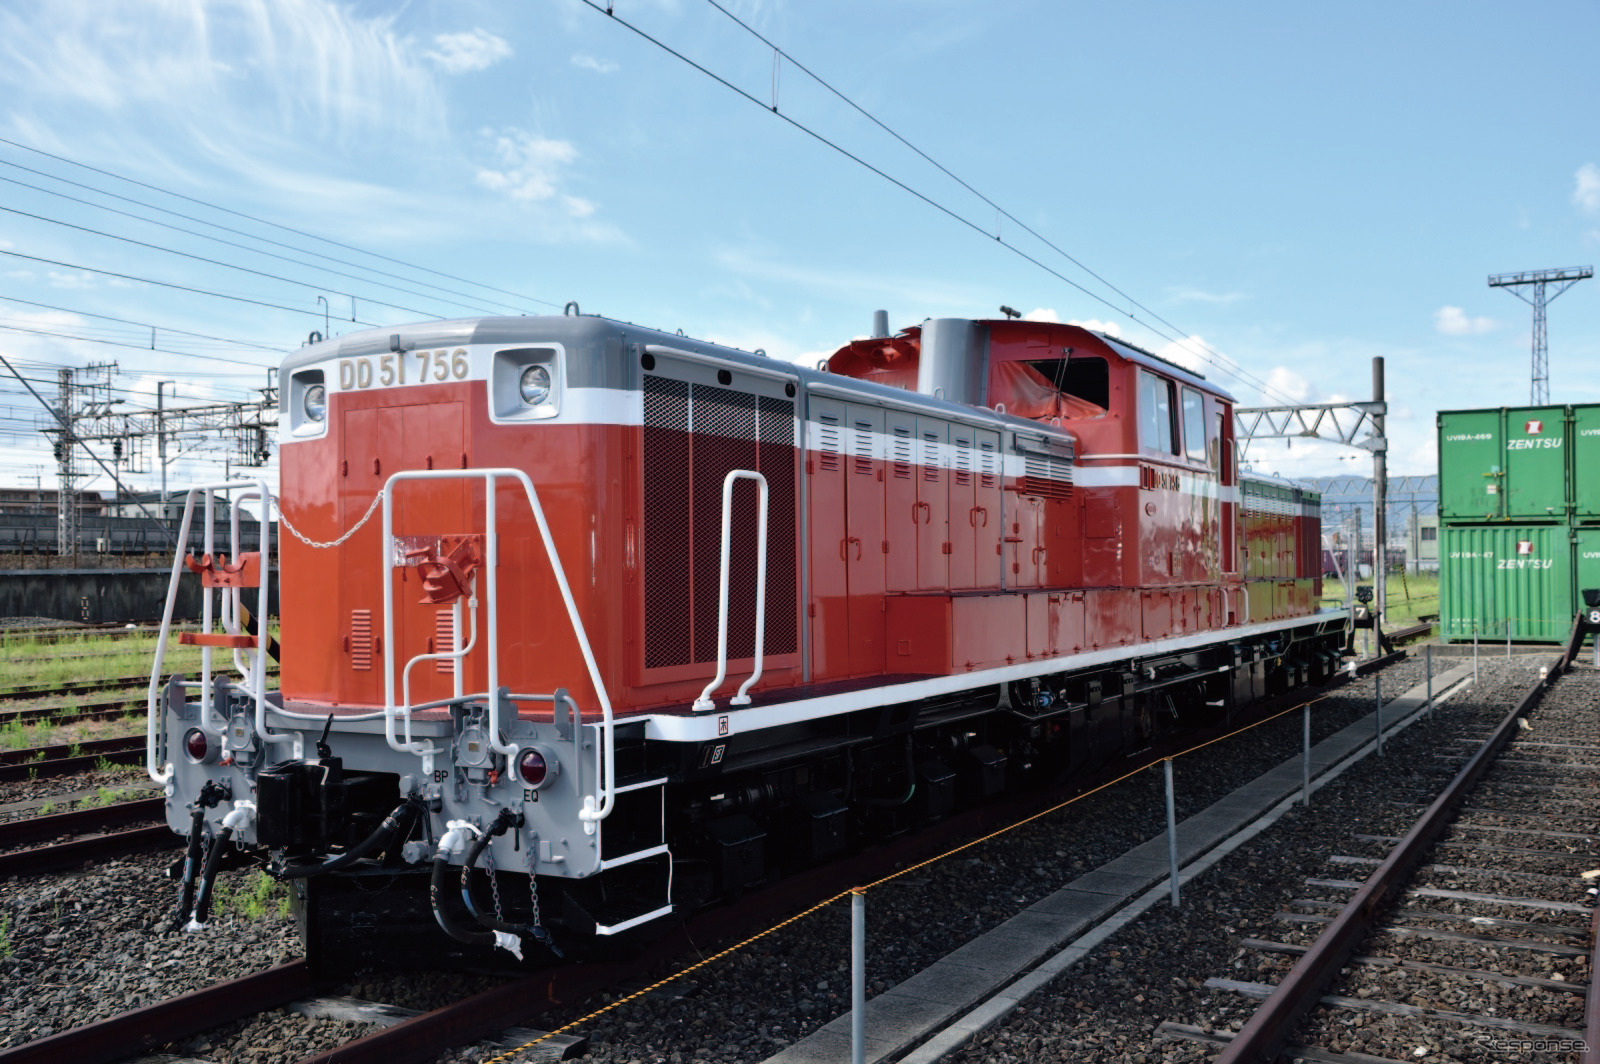 JR西日本は京都鉄道博物館の展示品として、JR貨物から機関車などの寄贈を受けた。写真はディーゼル機関車のDD51 756。